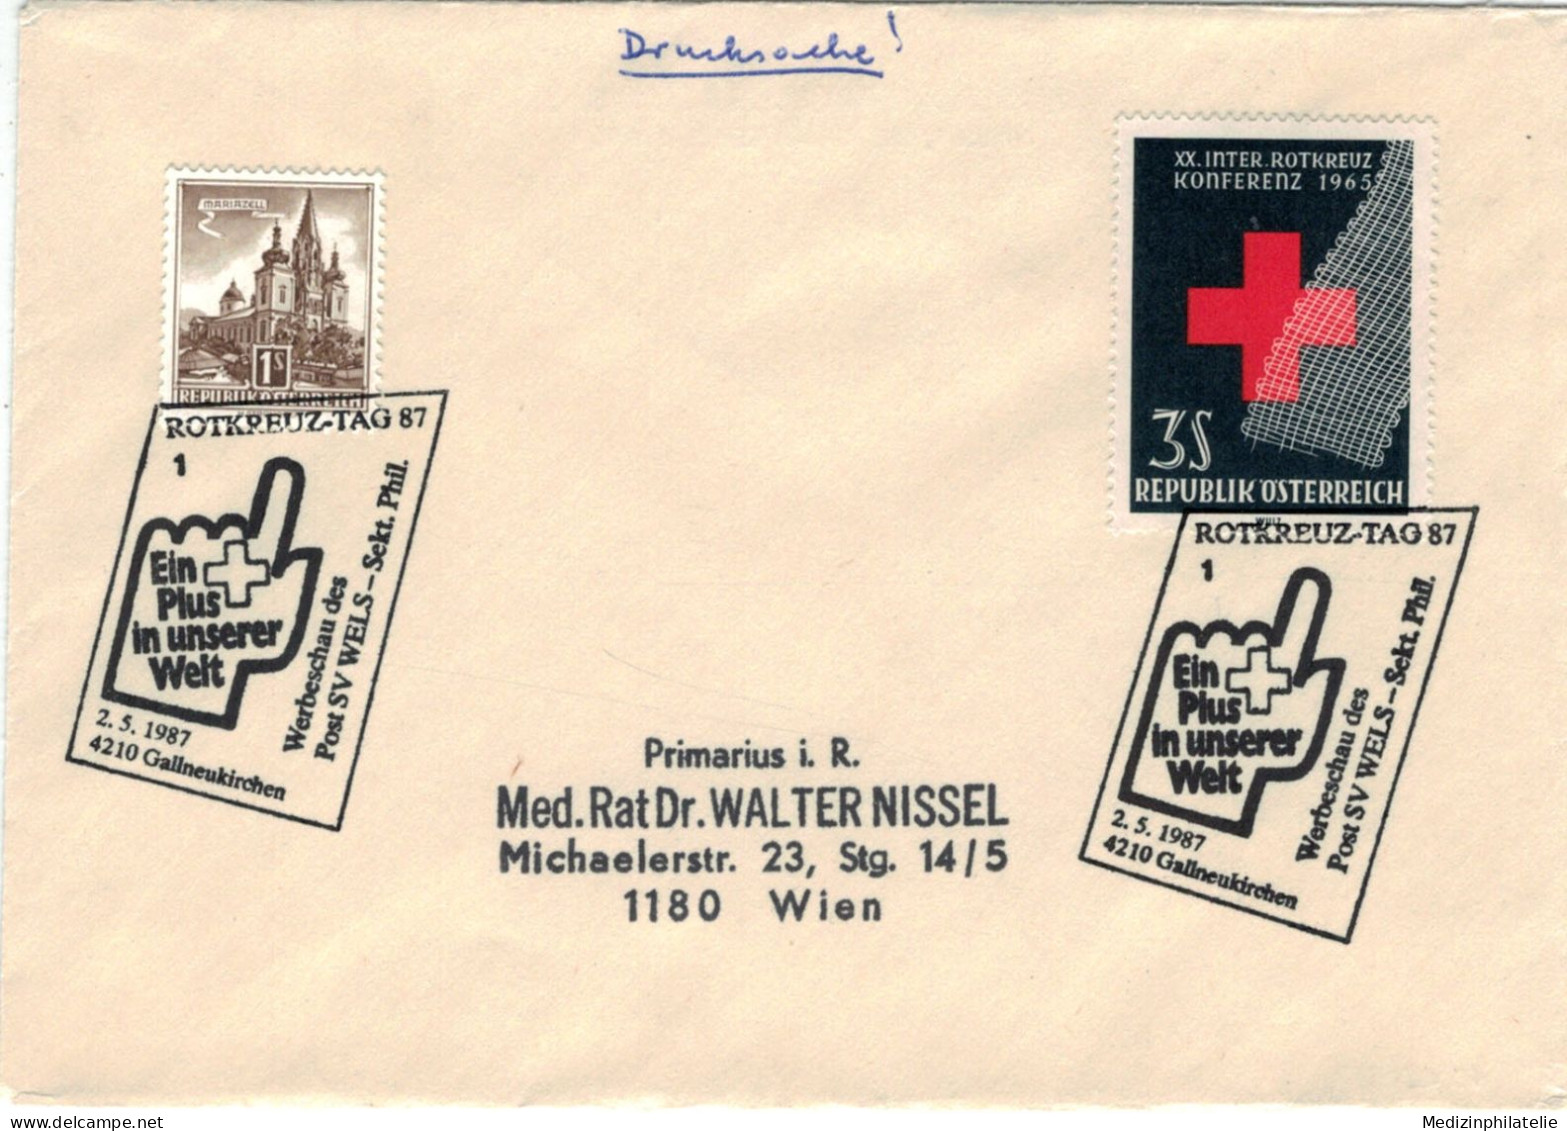 Rotes Kreuz - 4210 Gallneukirchen 1987 Werbeschau Wels - First Aid